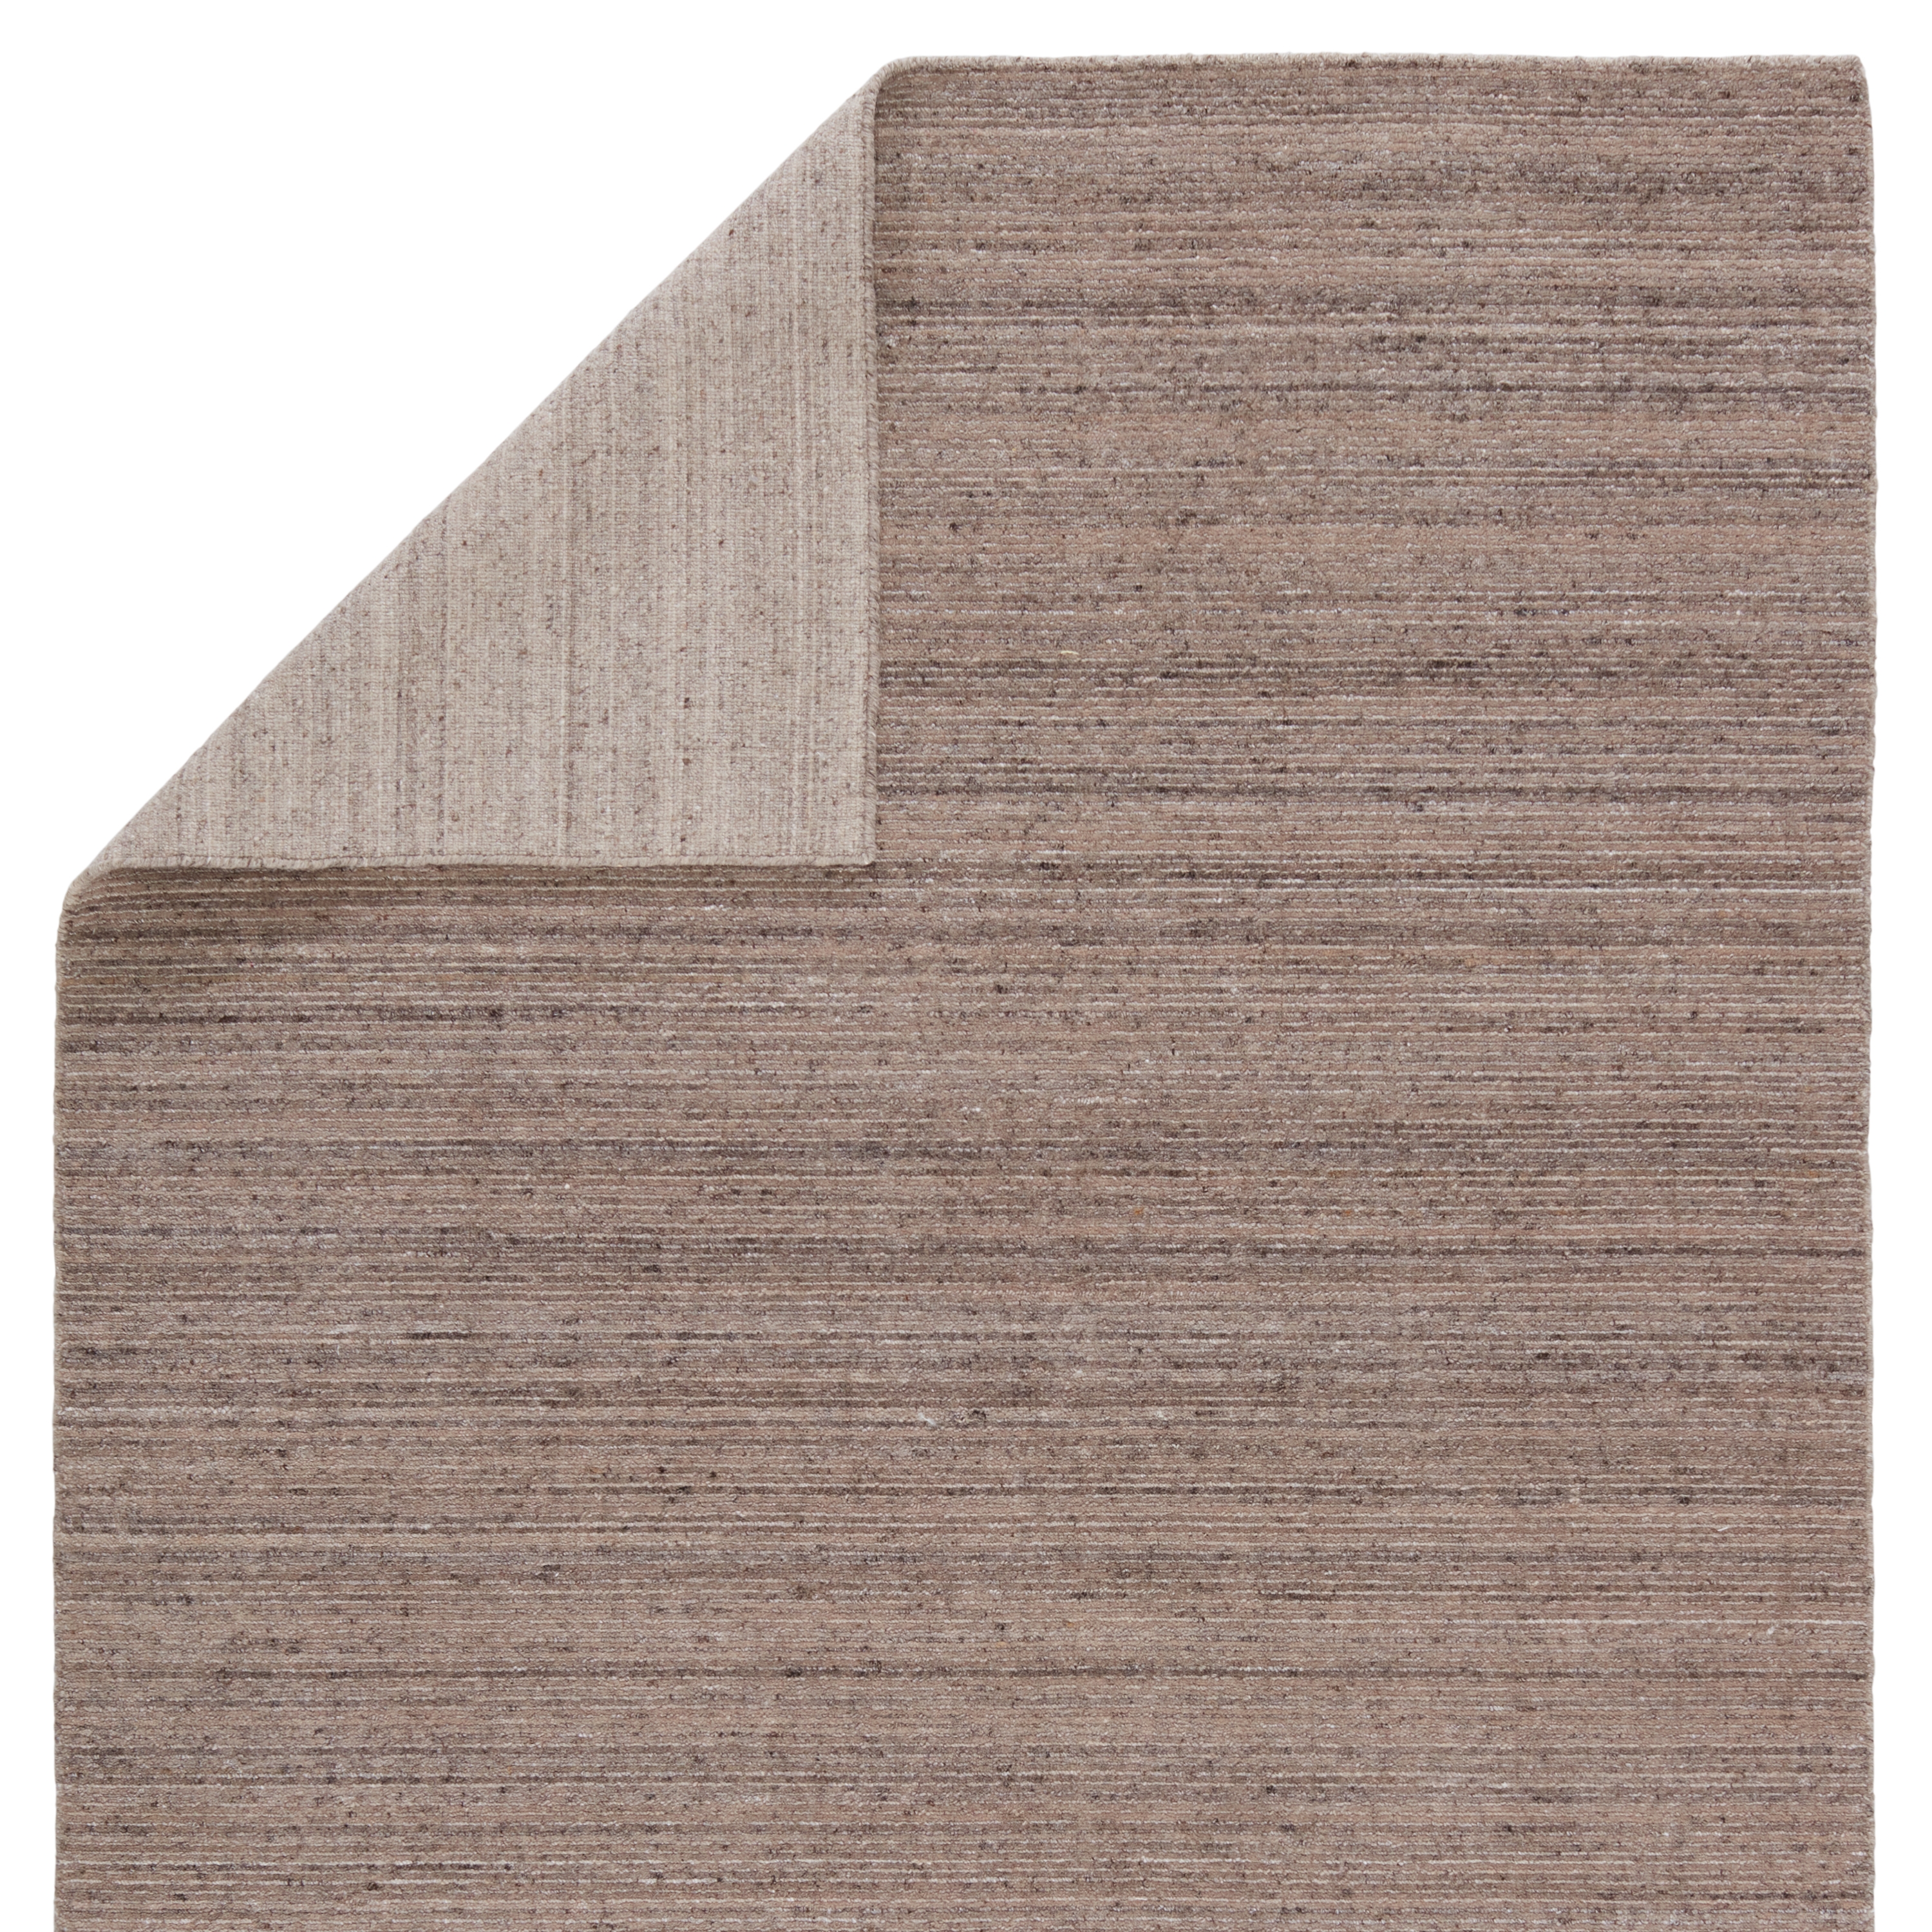 Evenin Handmade Solid Brown/ Tan Area Rug (5'X8') - Image 2